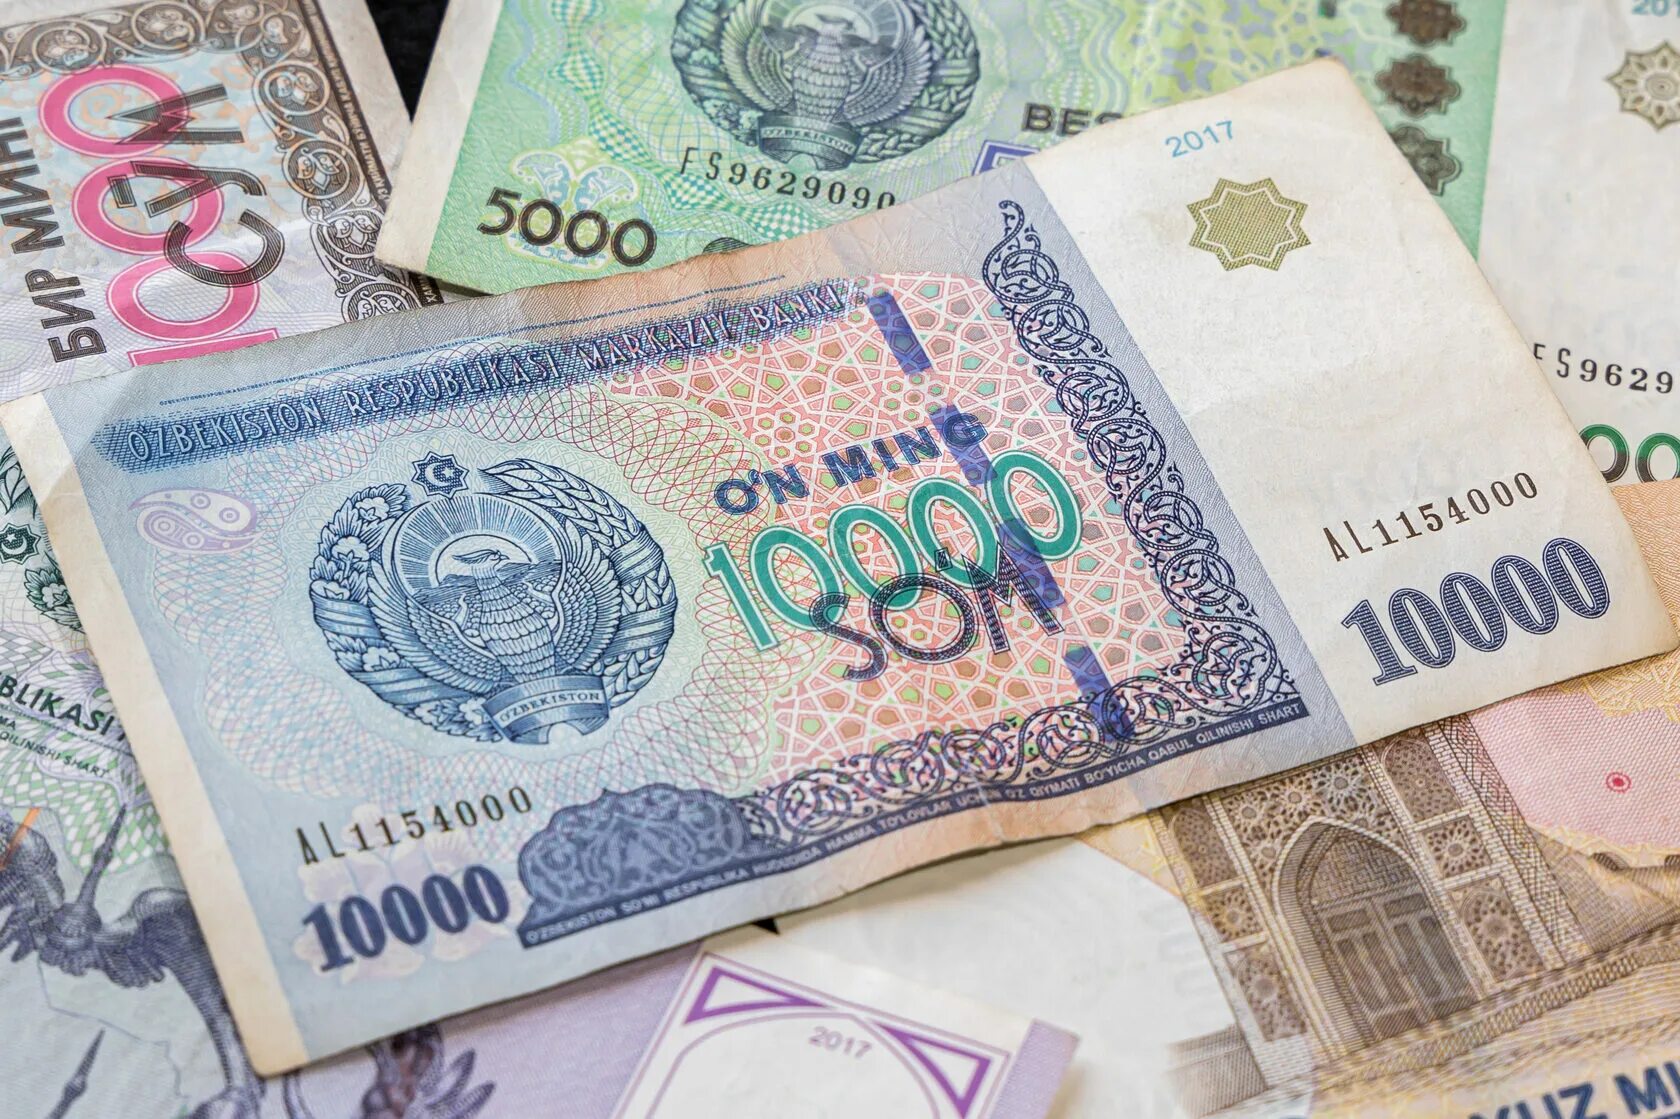 2000 Узбекских сум. Узбекистан валюта 100$. Валюта Узбекистана сум. Узбекские купюры. 50 000 uzs